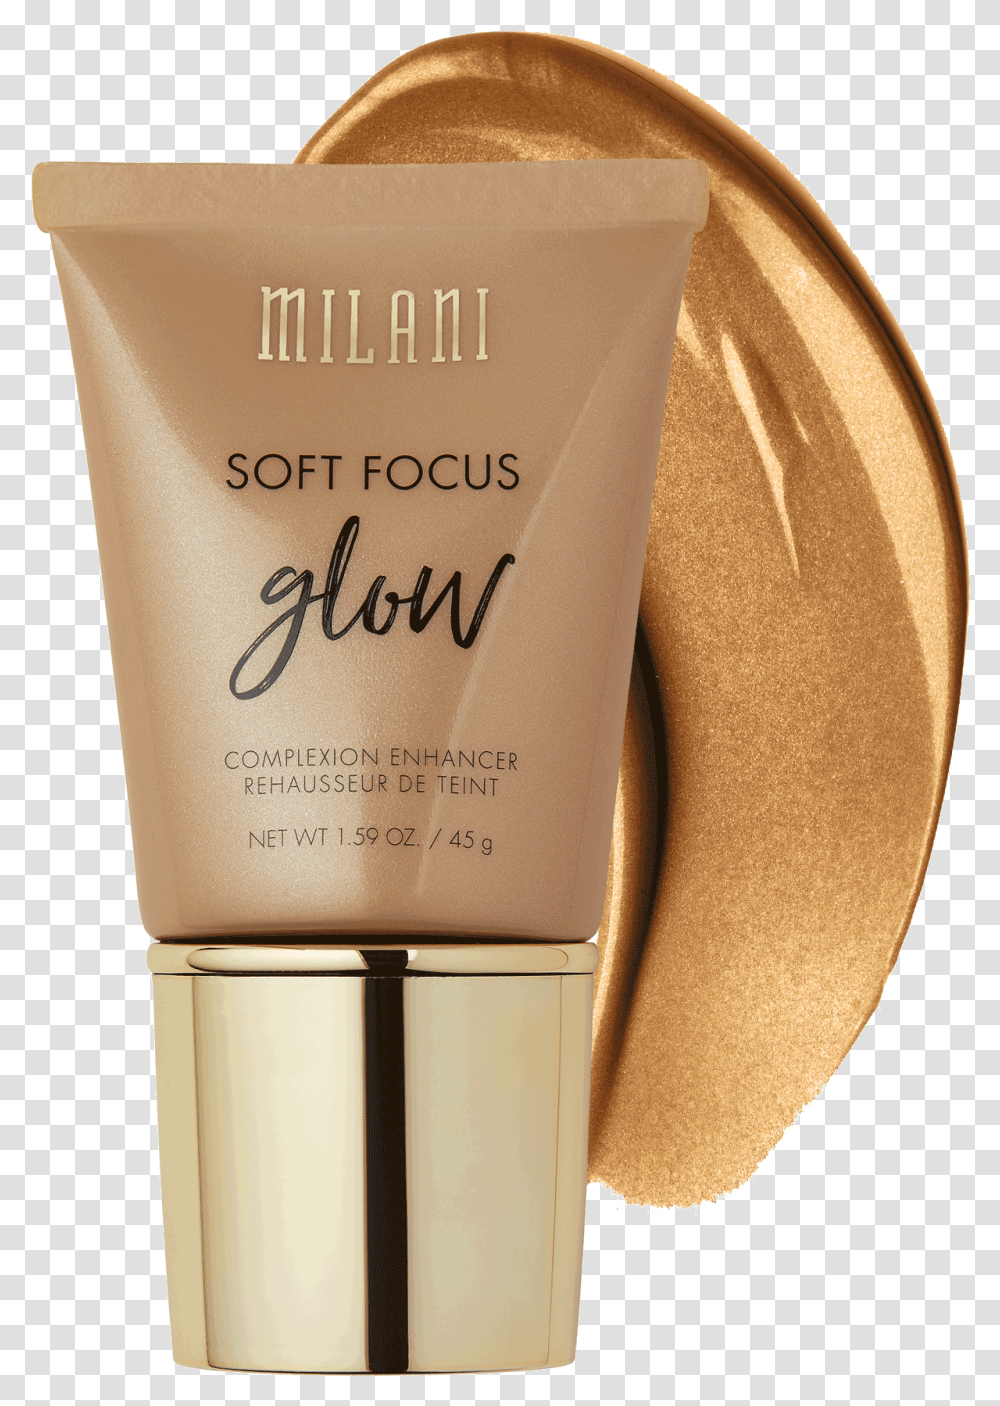 Price Of Milani Soft Focus Glow, Cosmetics, Bottle, Box, Face Makeup Transparent Png